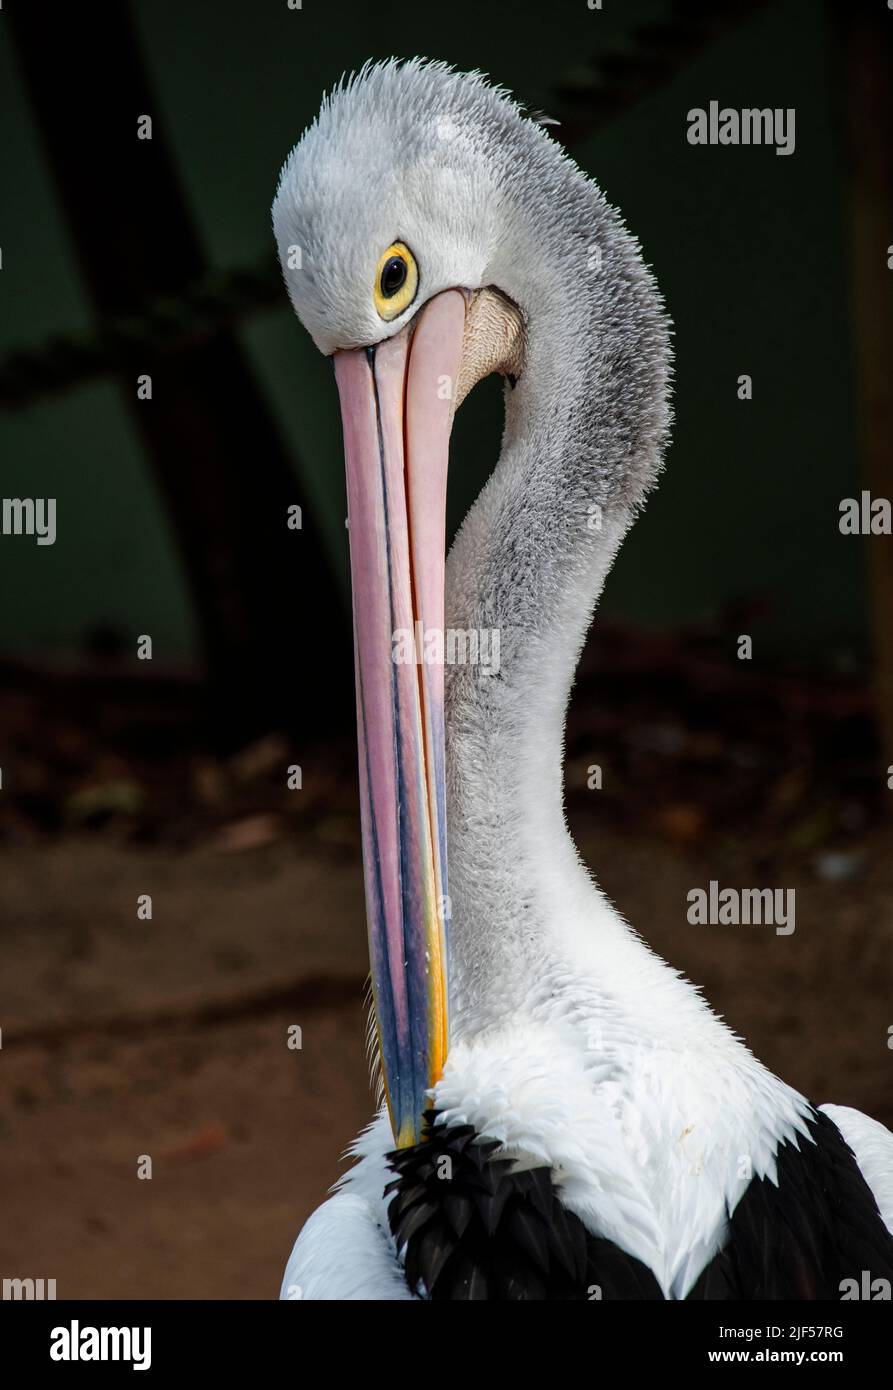 Close-up of an Australian Pelican (Pelecanus conspicillatus) in Sydney, New South Wales, Australia (Photo by Tara Chand Malhotra) Stock Photo